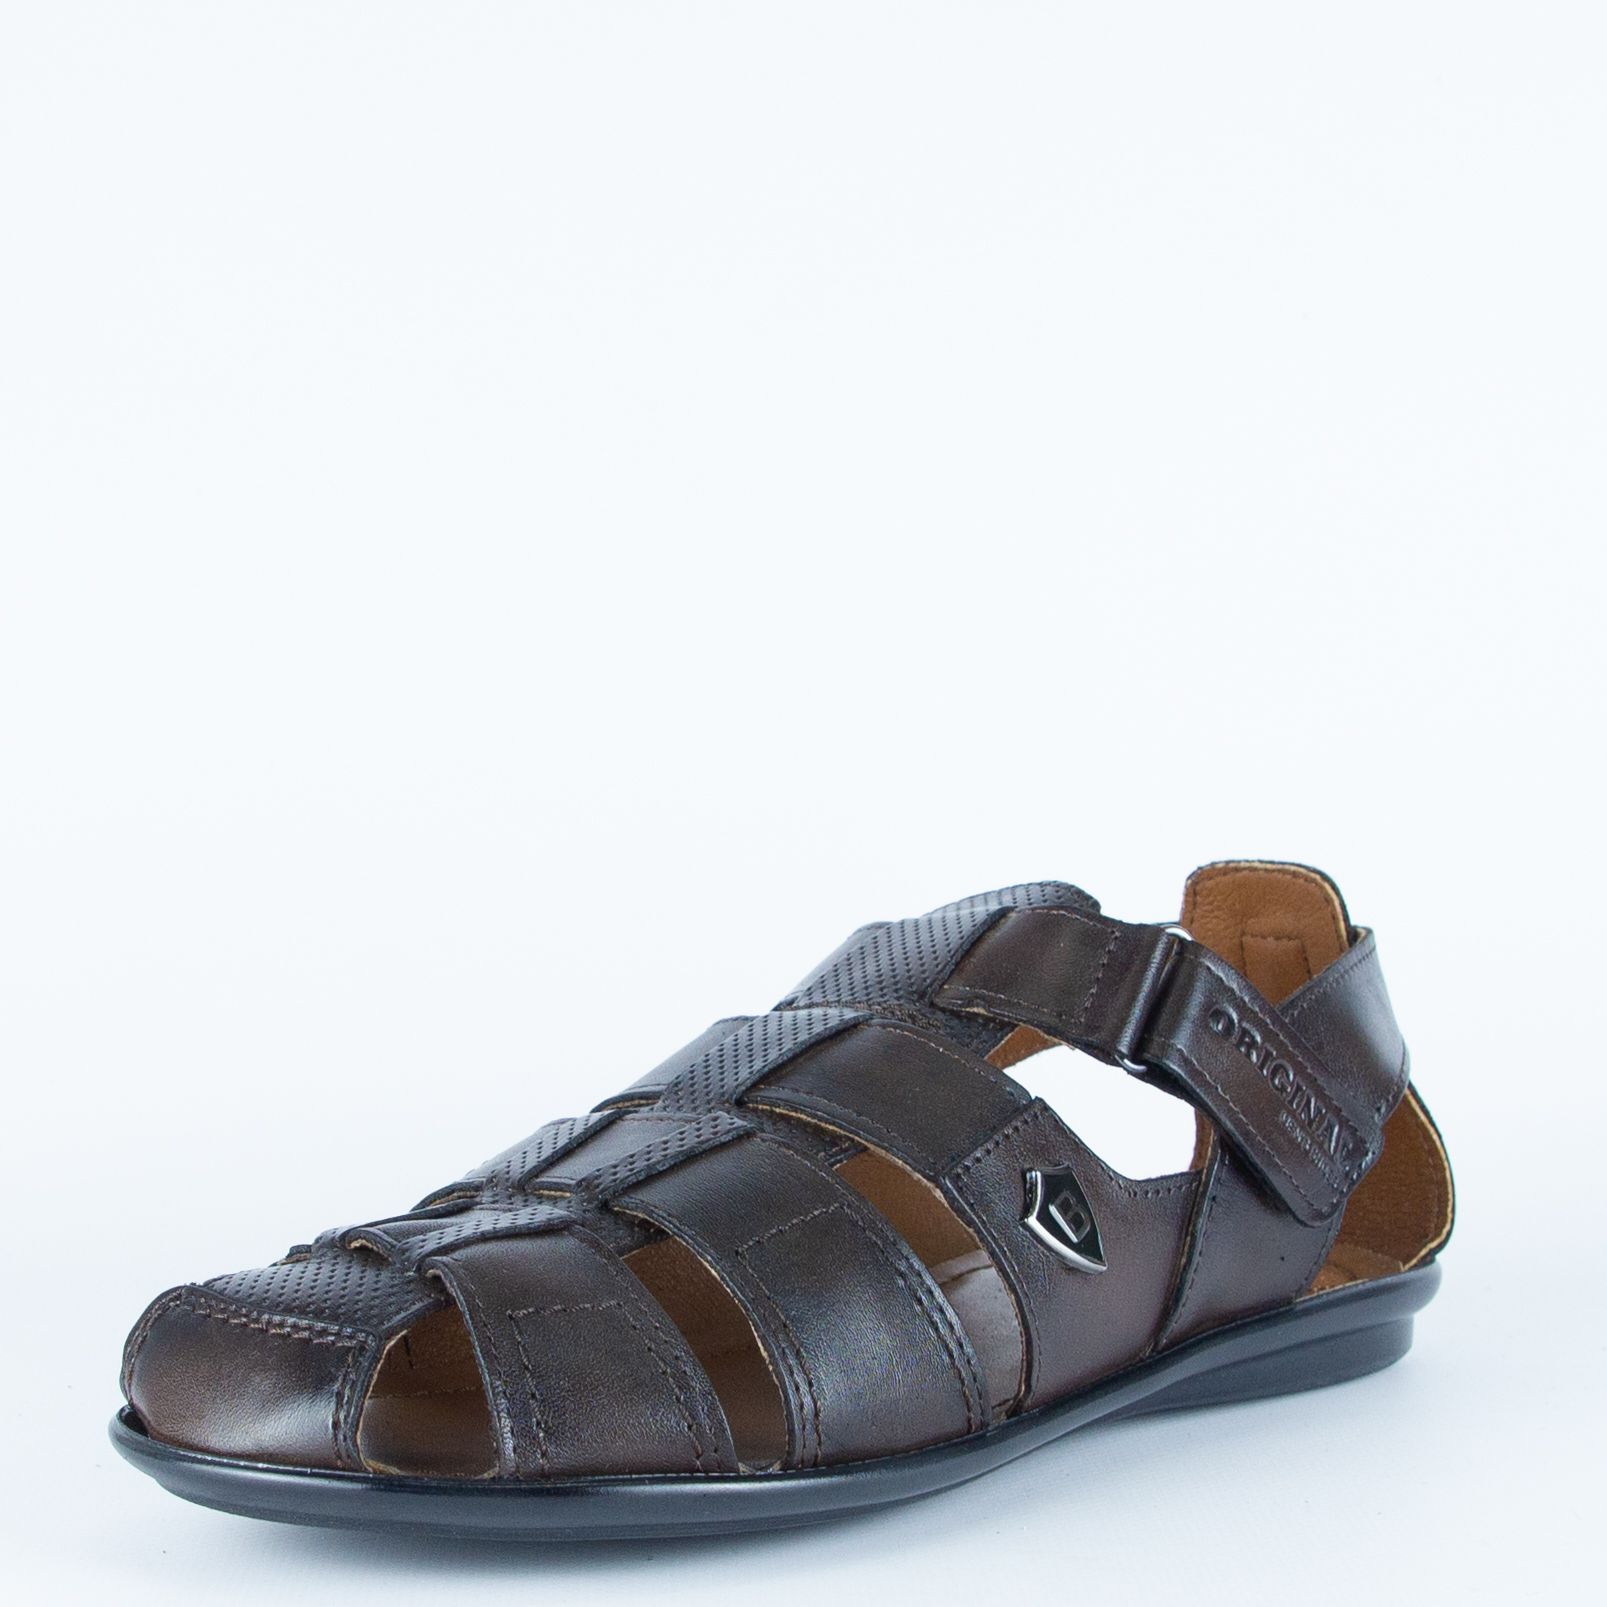 Сандалии мужские Comfort Shoes Сан-2/2 коричневые 44 RU